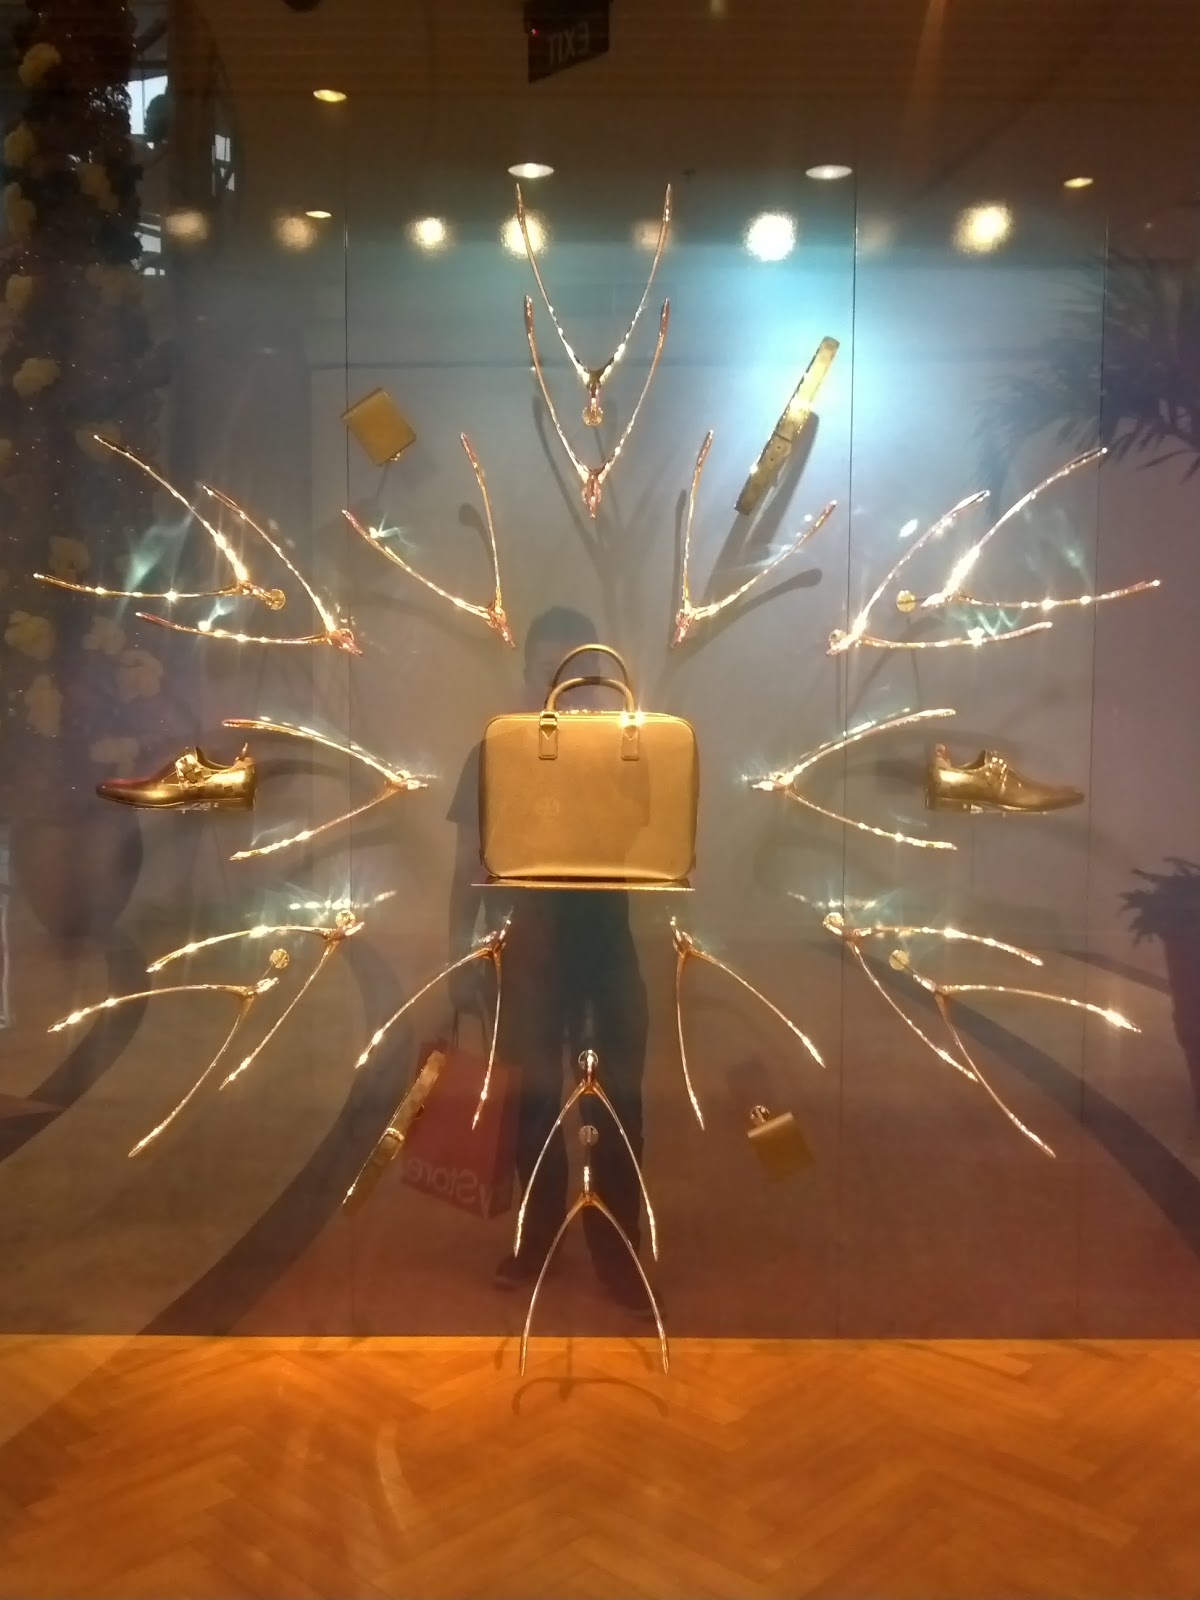 Louis Vuitton  The Window Display Blog